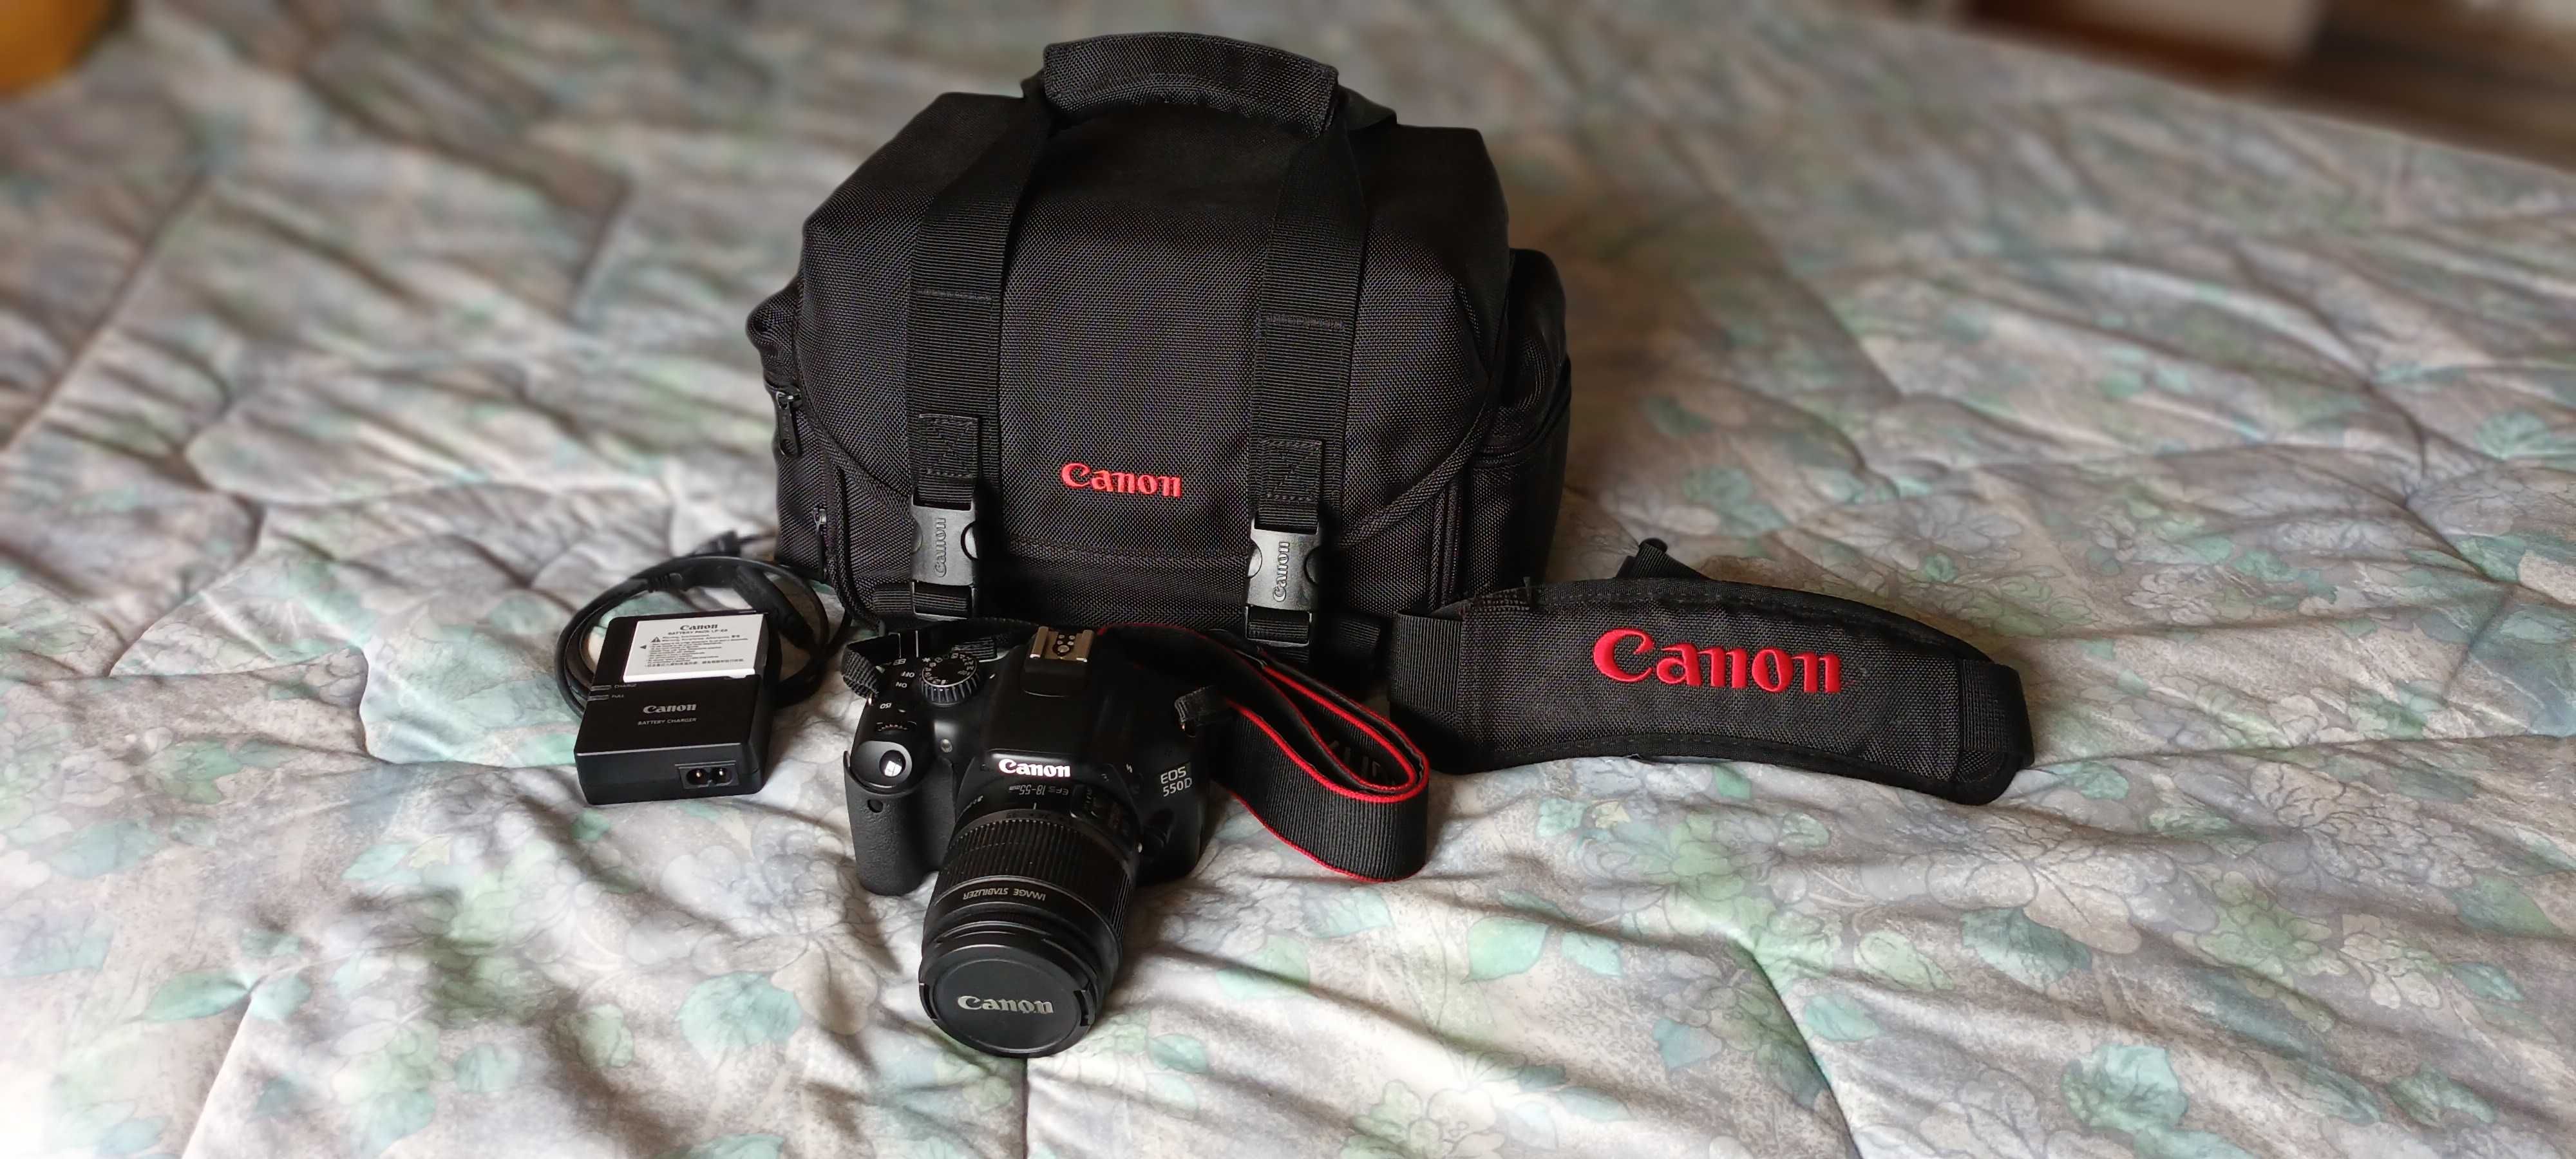 Câmara Canon EOS 550D + Objectiva 18-55mm